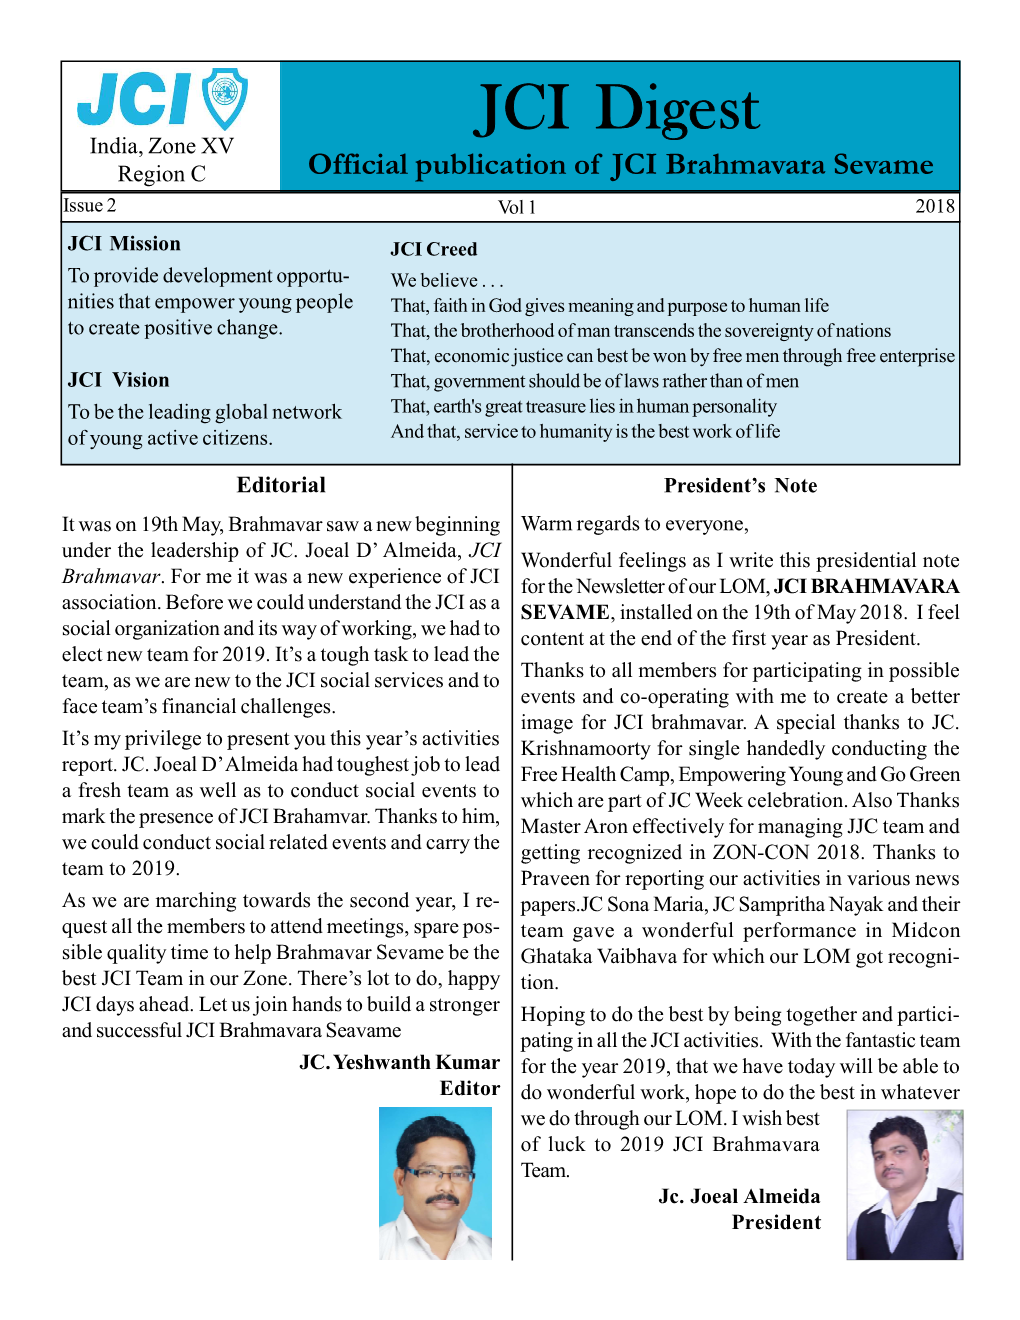 JCI Digest India, Zone XV Region C Official Publication of JCI Brahmavara Sevame Issue 2 Vol 1 2018